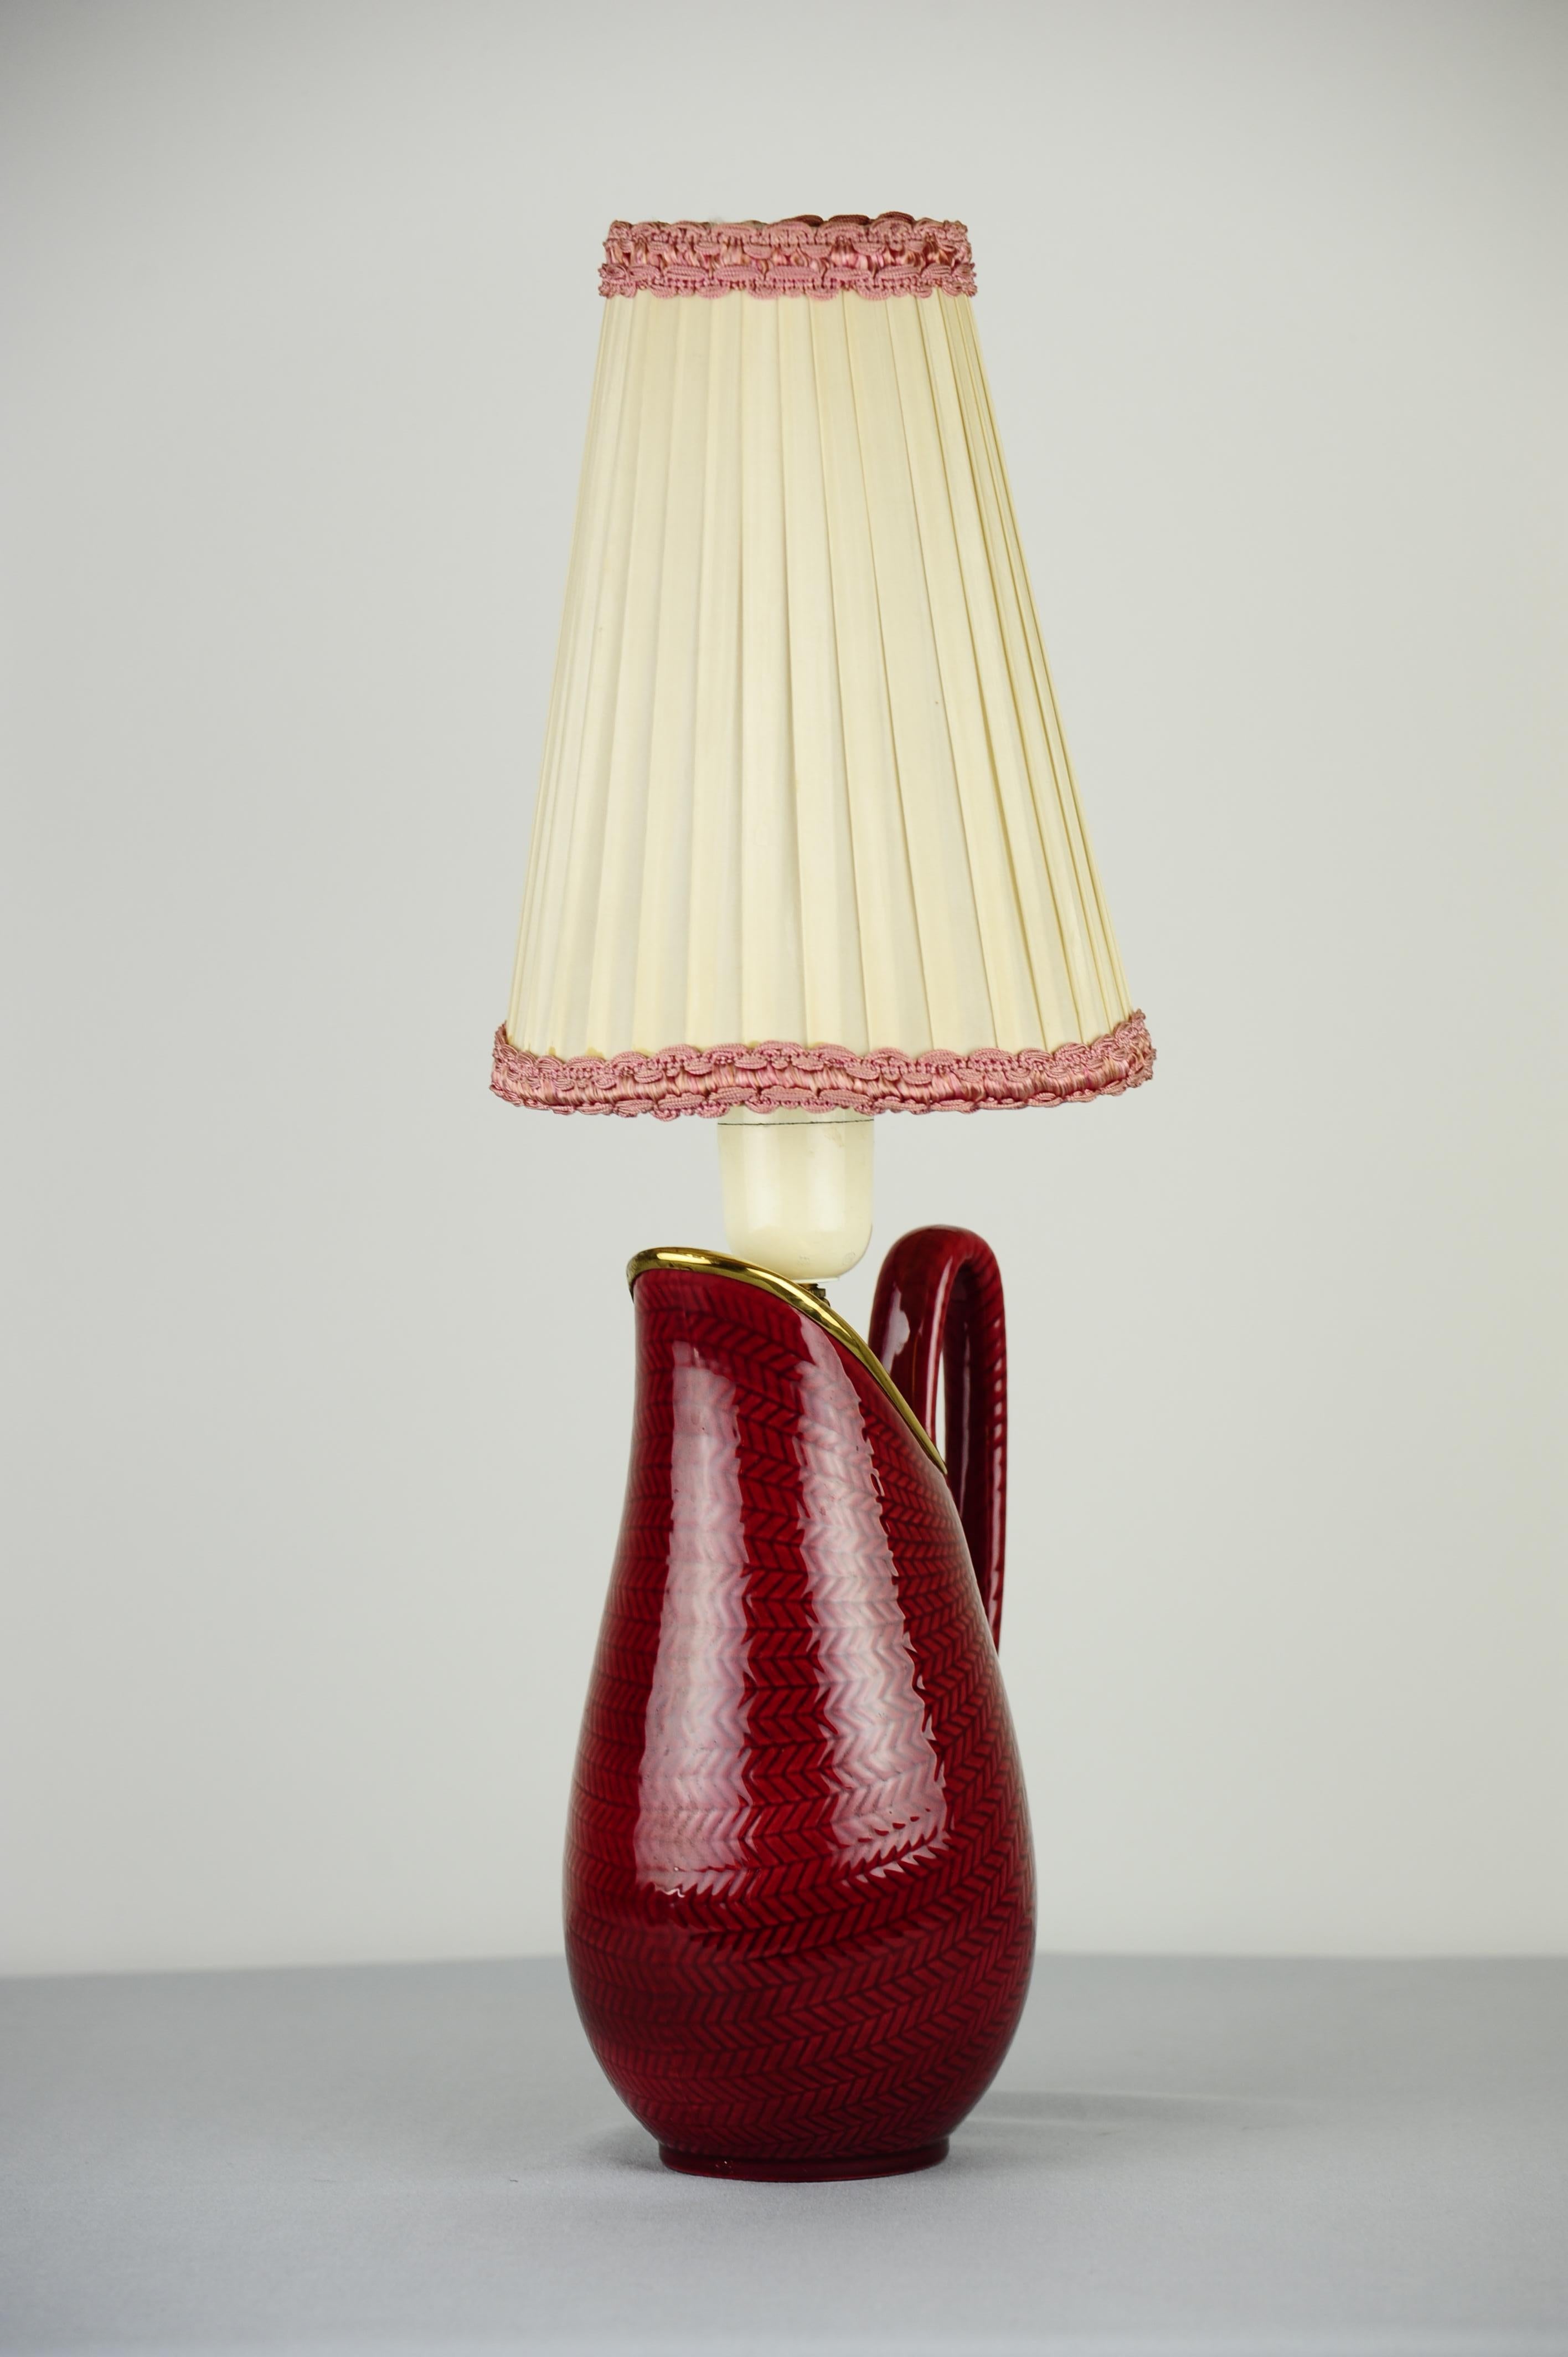 Ceramic table lamp made in Sweden, around 1950s
Original condition.